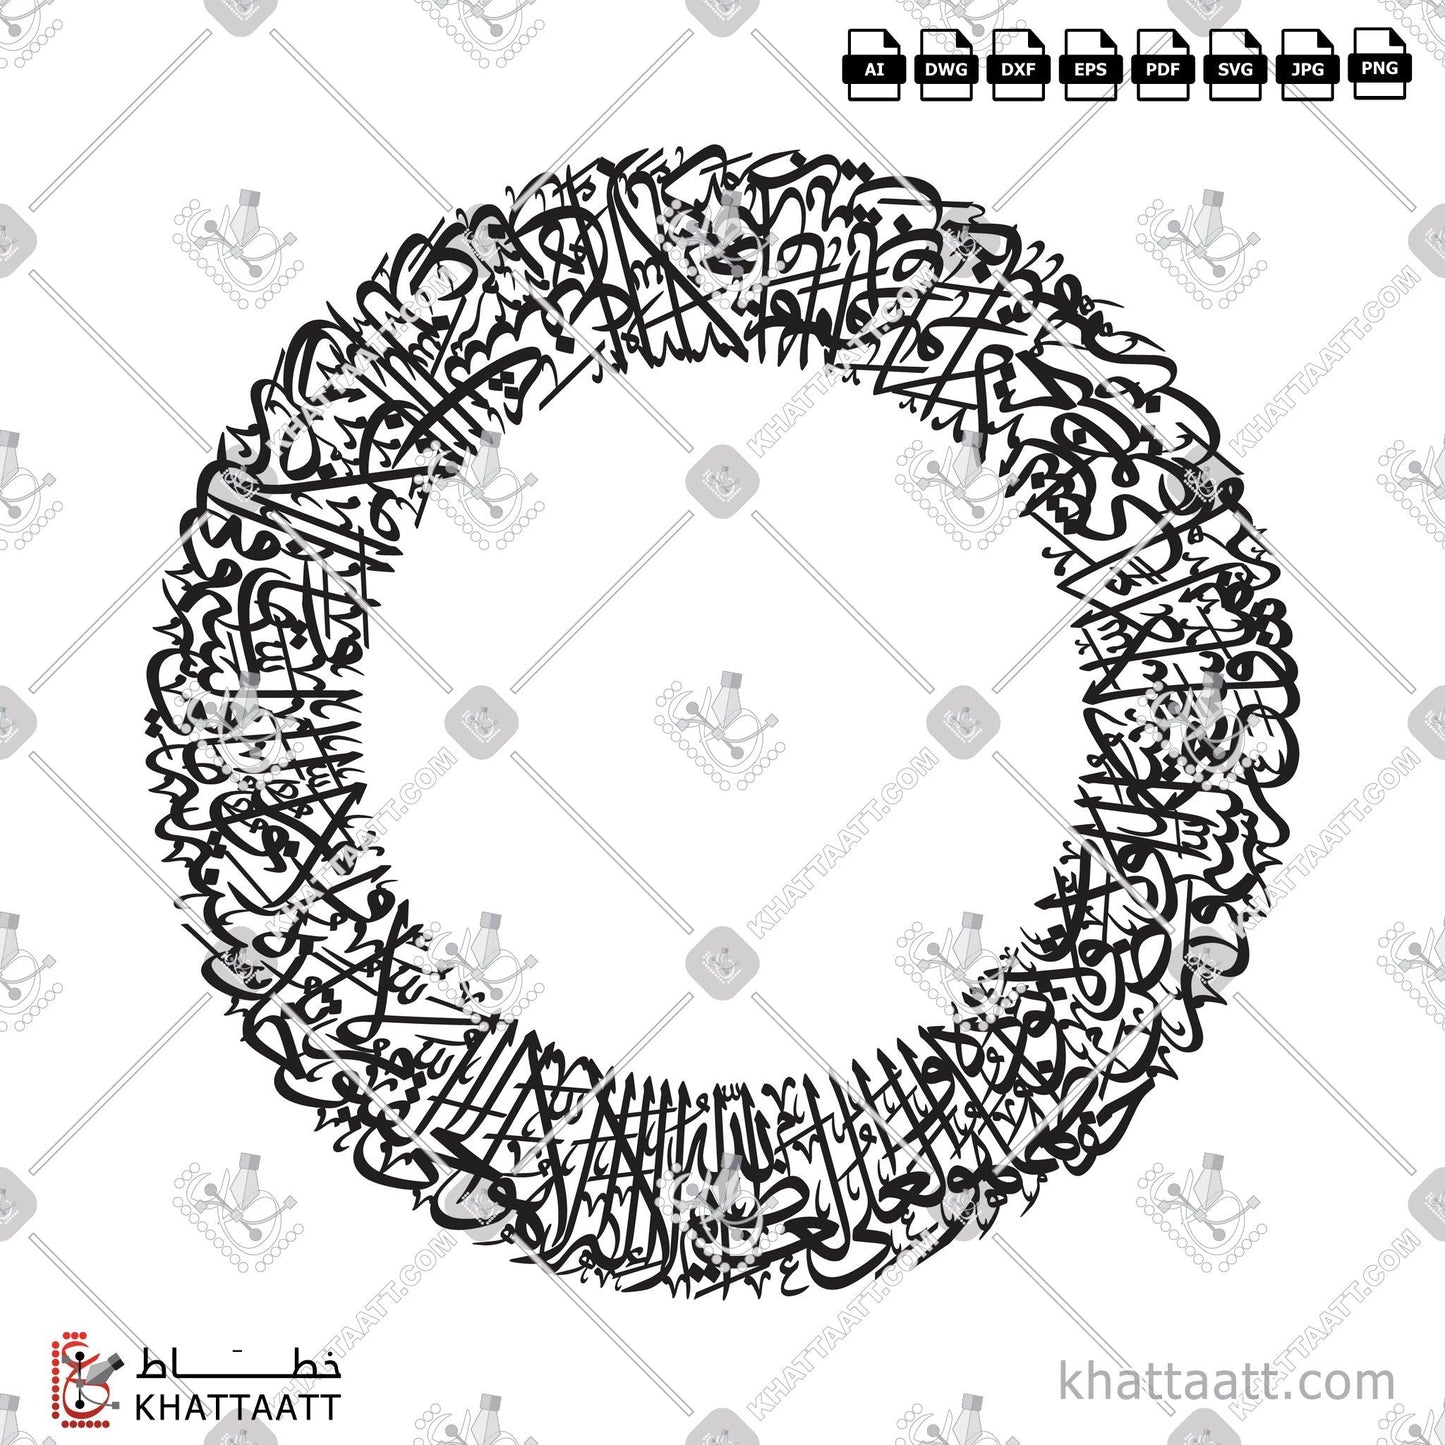 Digital Arabic calligraphy vector of Ayatul Kursi - آية الكرسي in Thuluth - خط الثلث